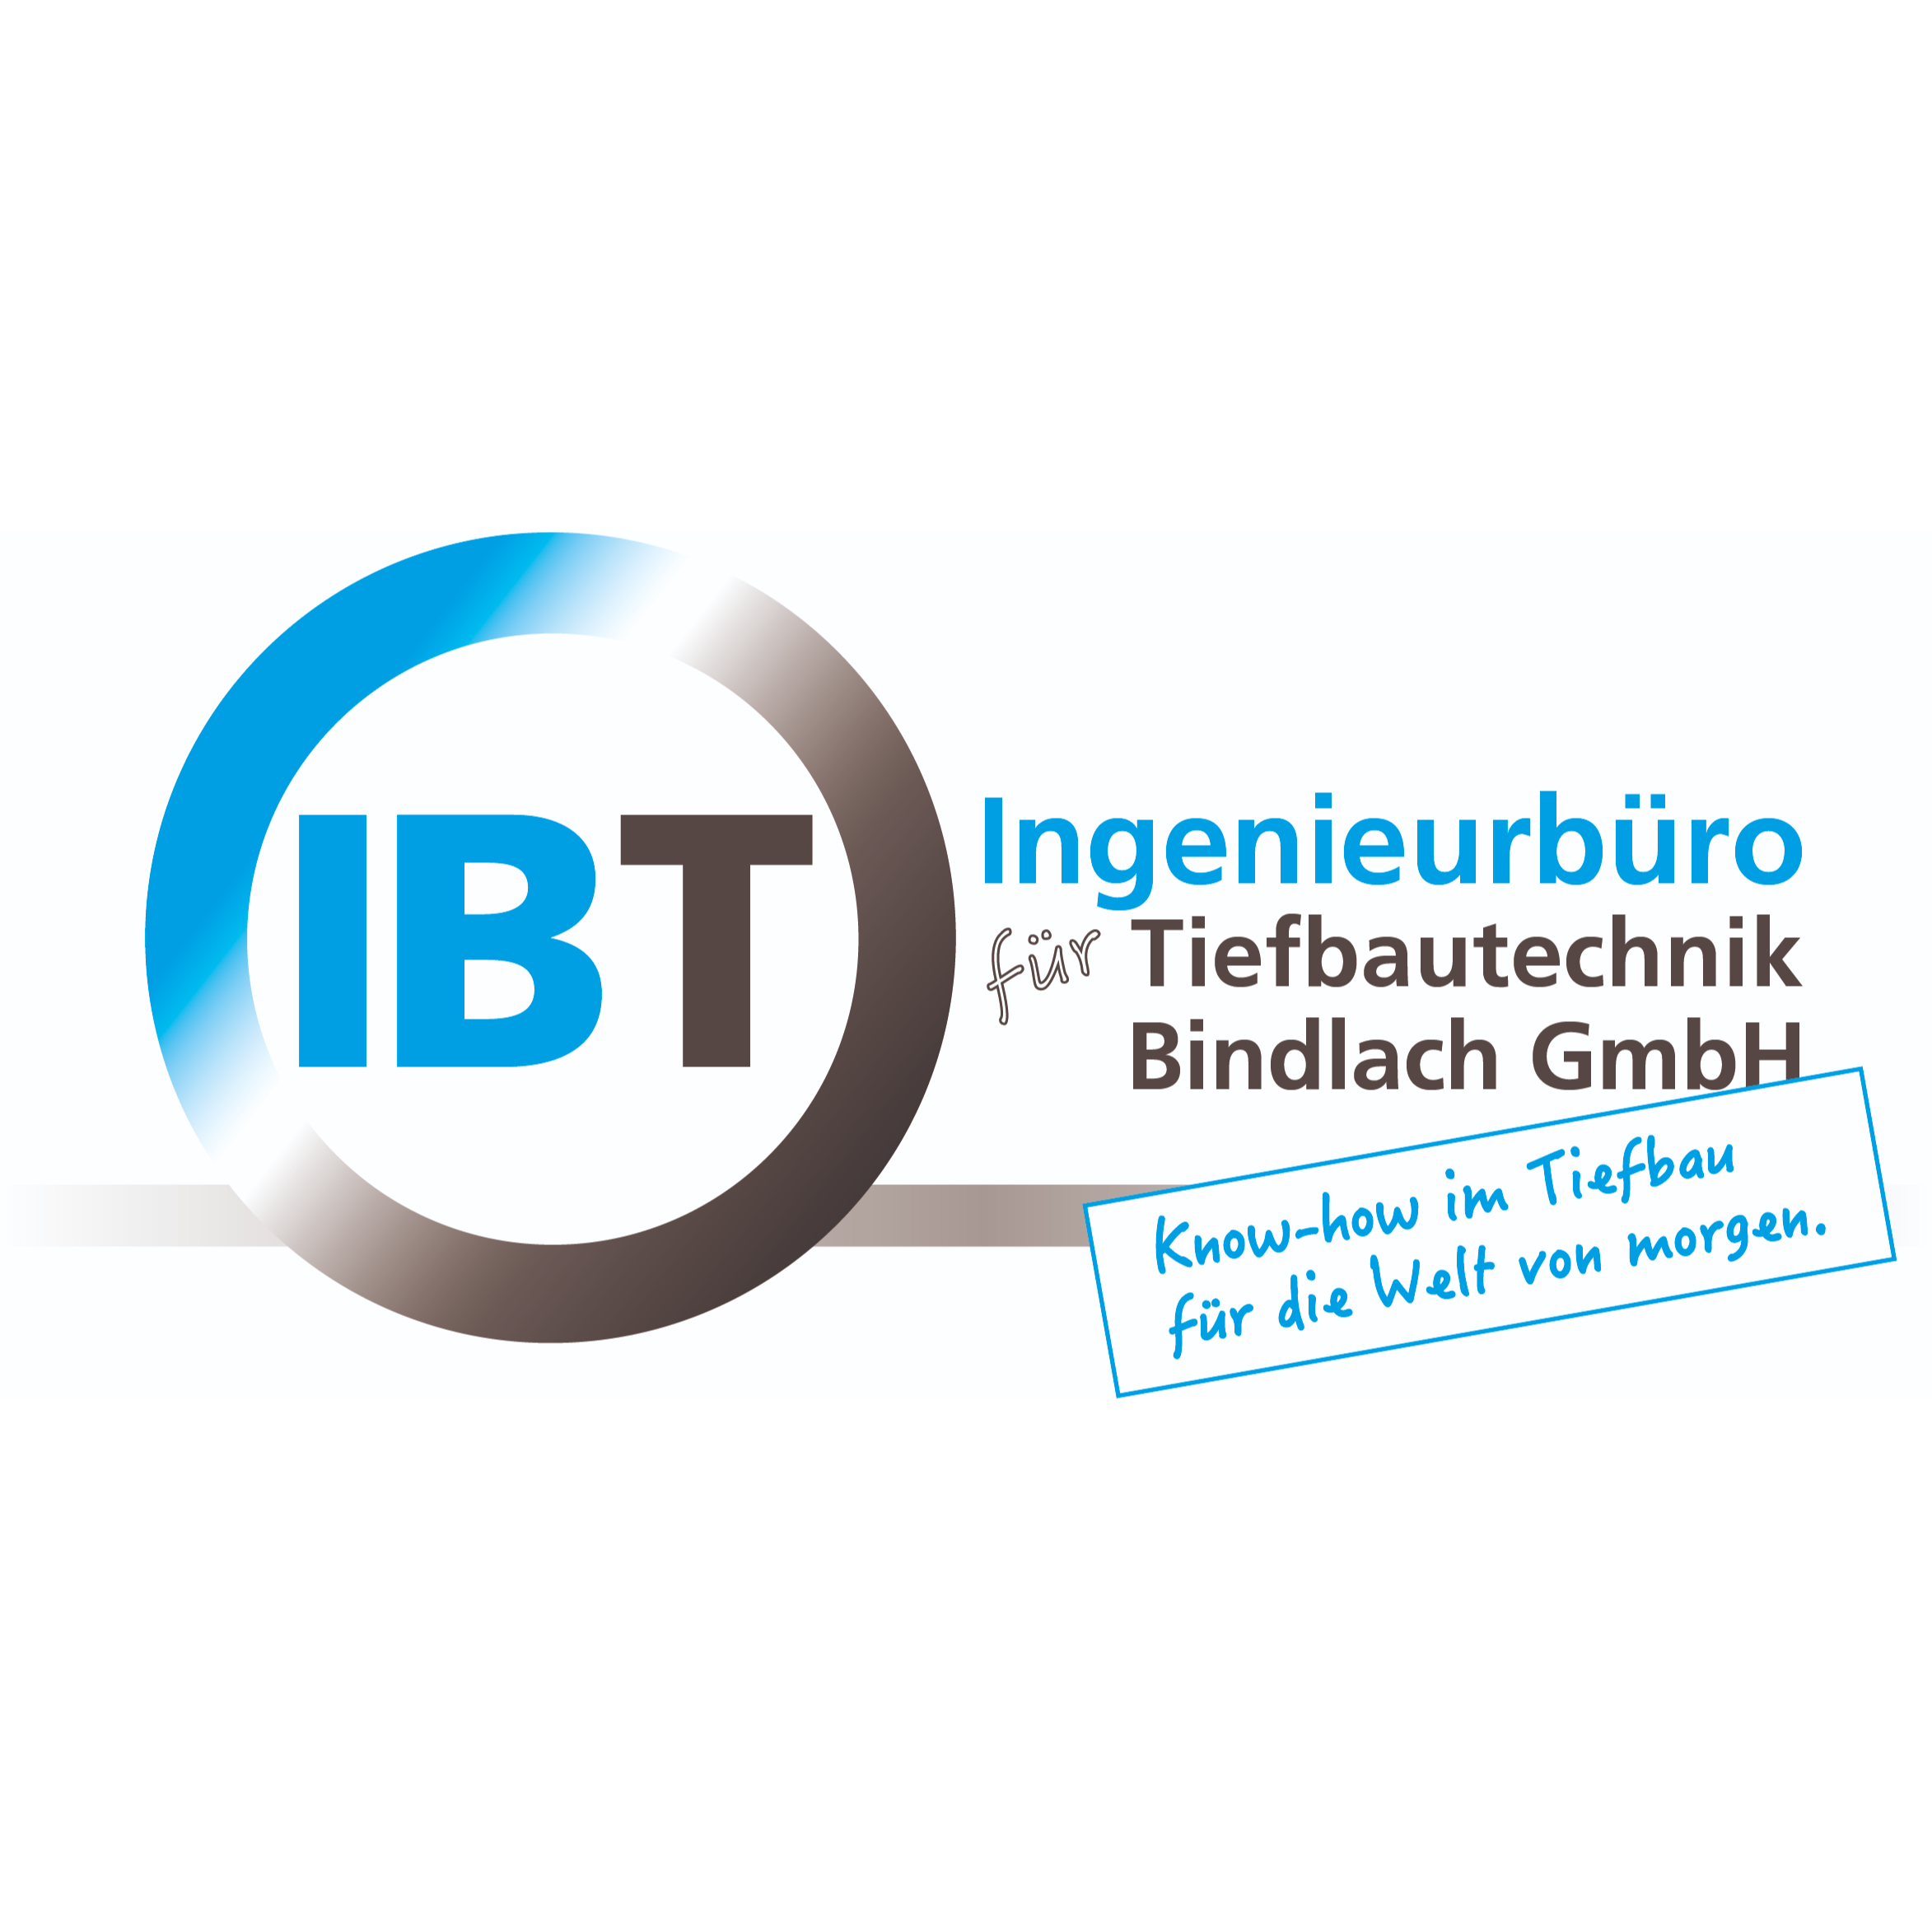 IBT - Ingenieurbüro für Tiefbautechnik Bindlach GmbH in Bindlach - Logo